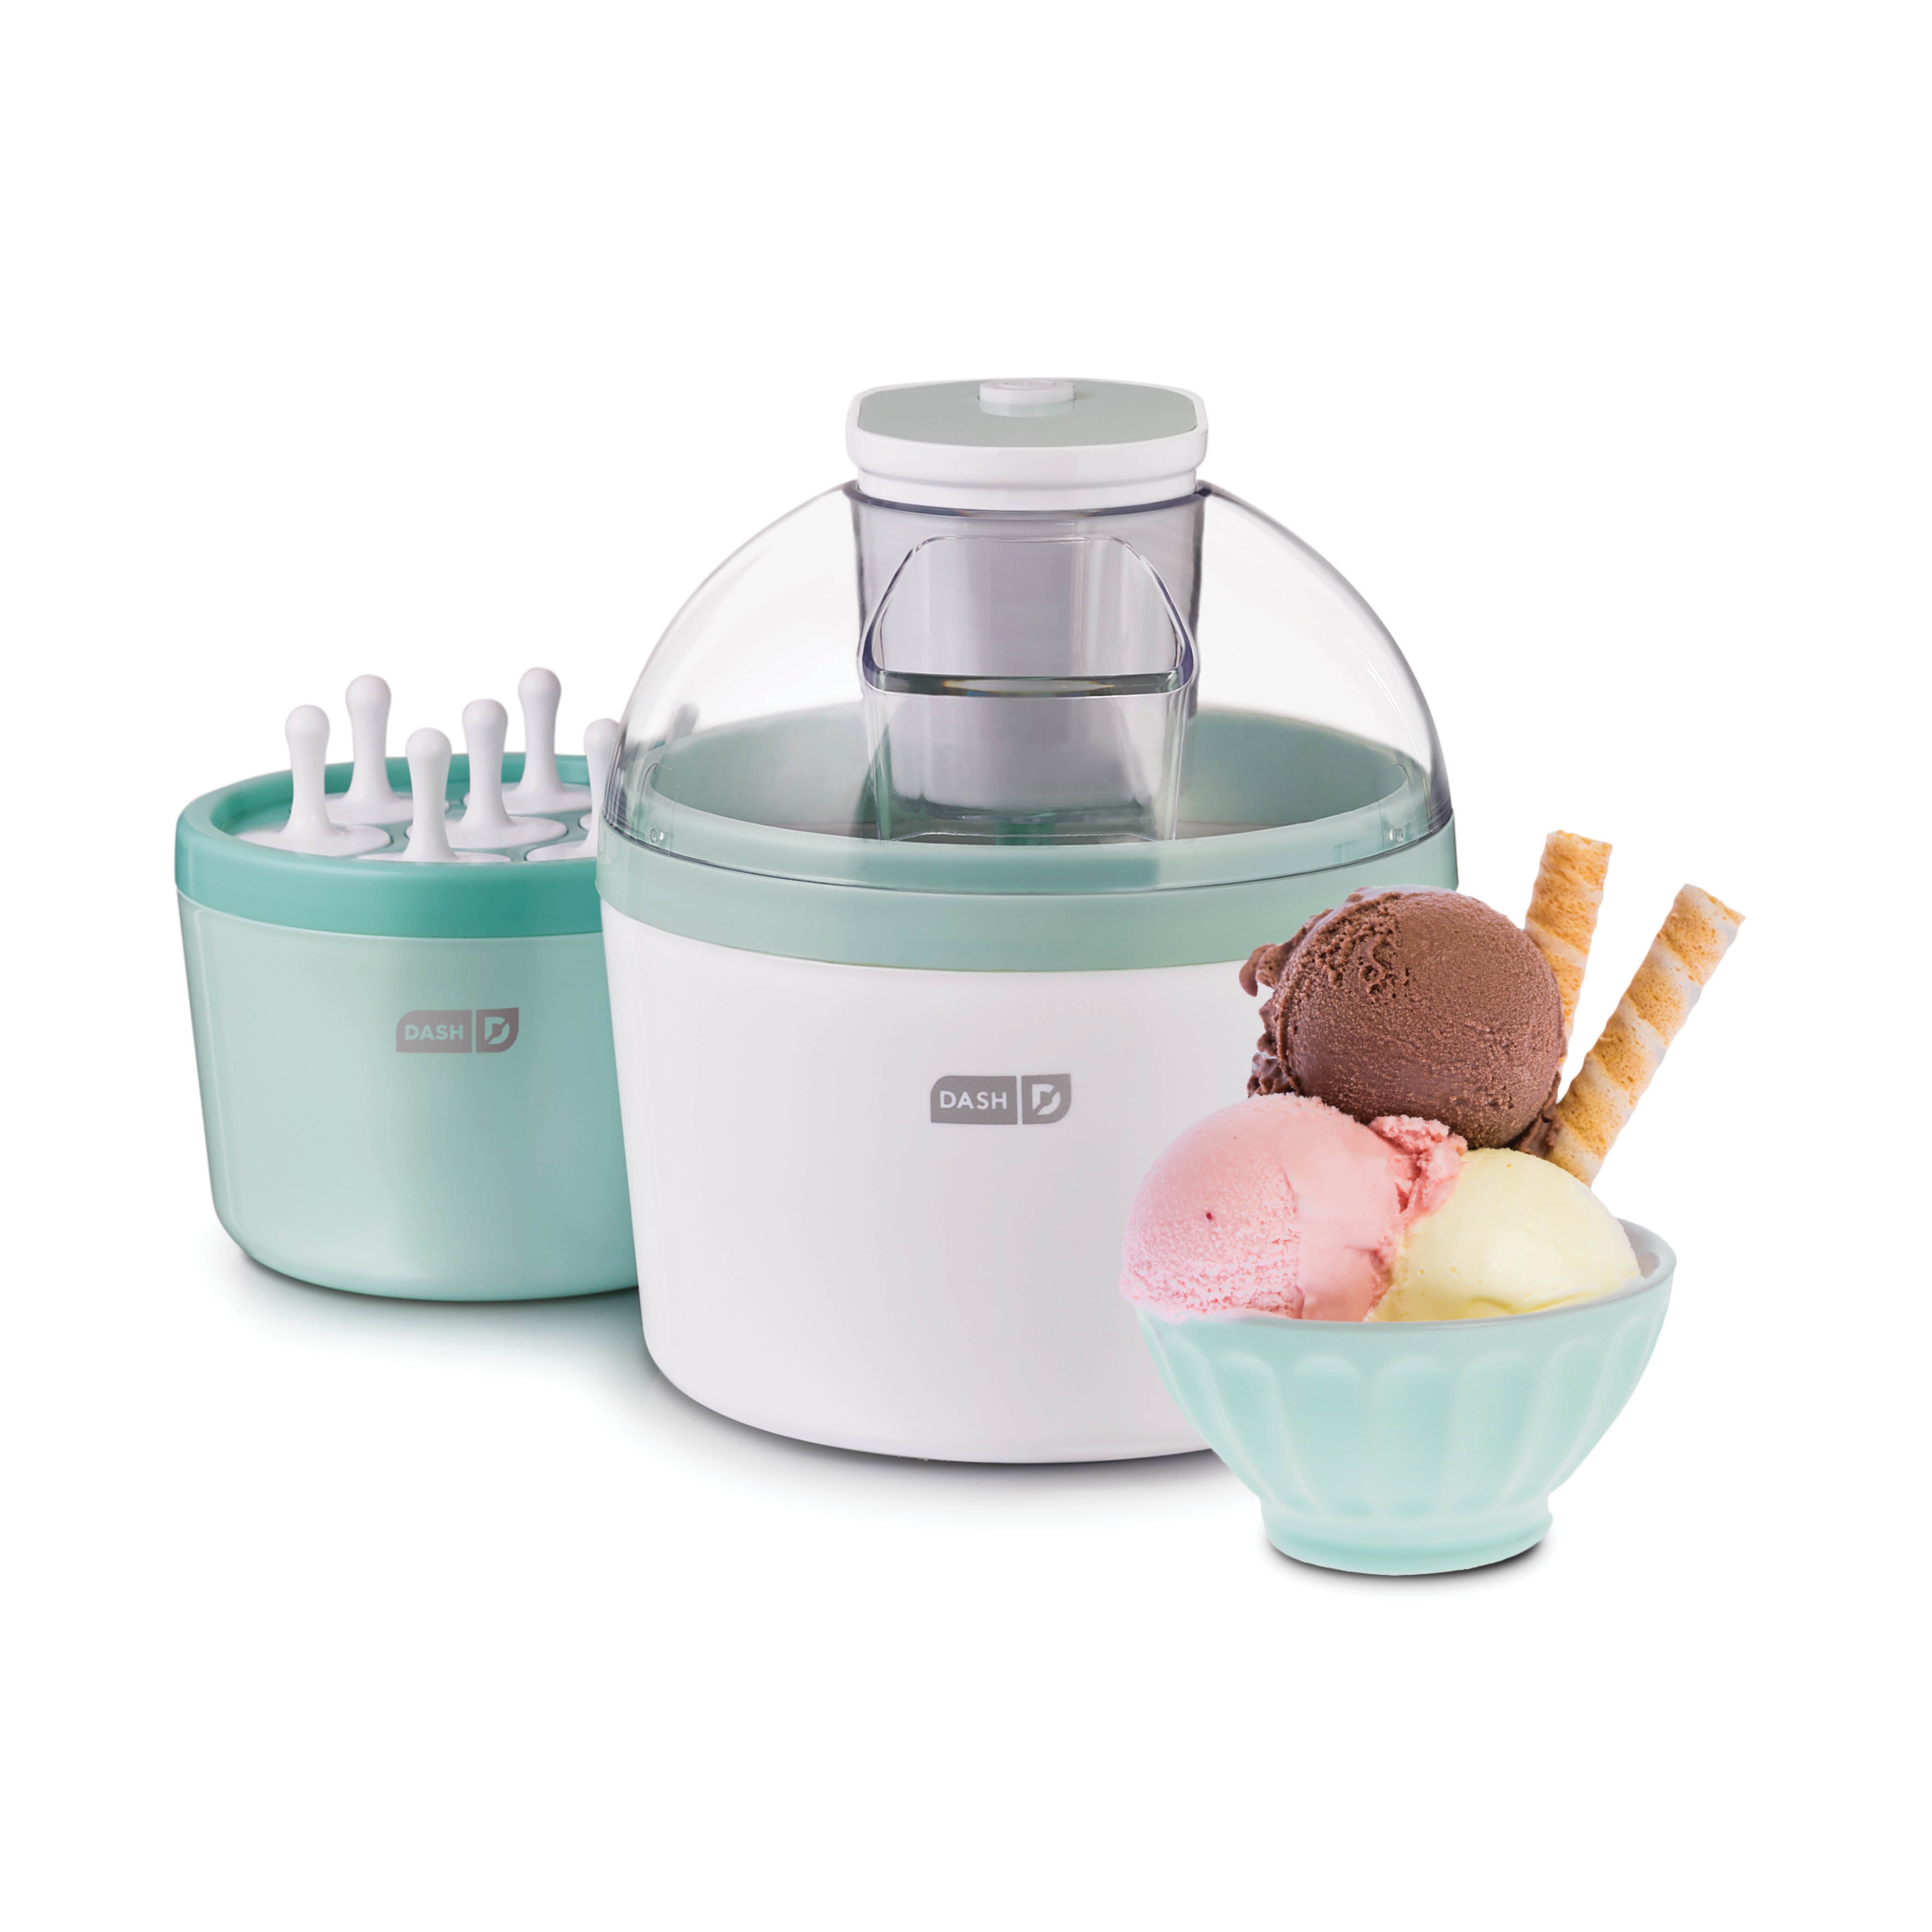 14 Dash Ice Cream Maker Recipes For Beginners - Corrie Cooks